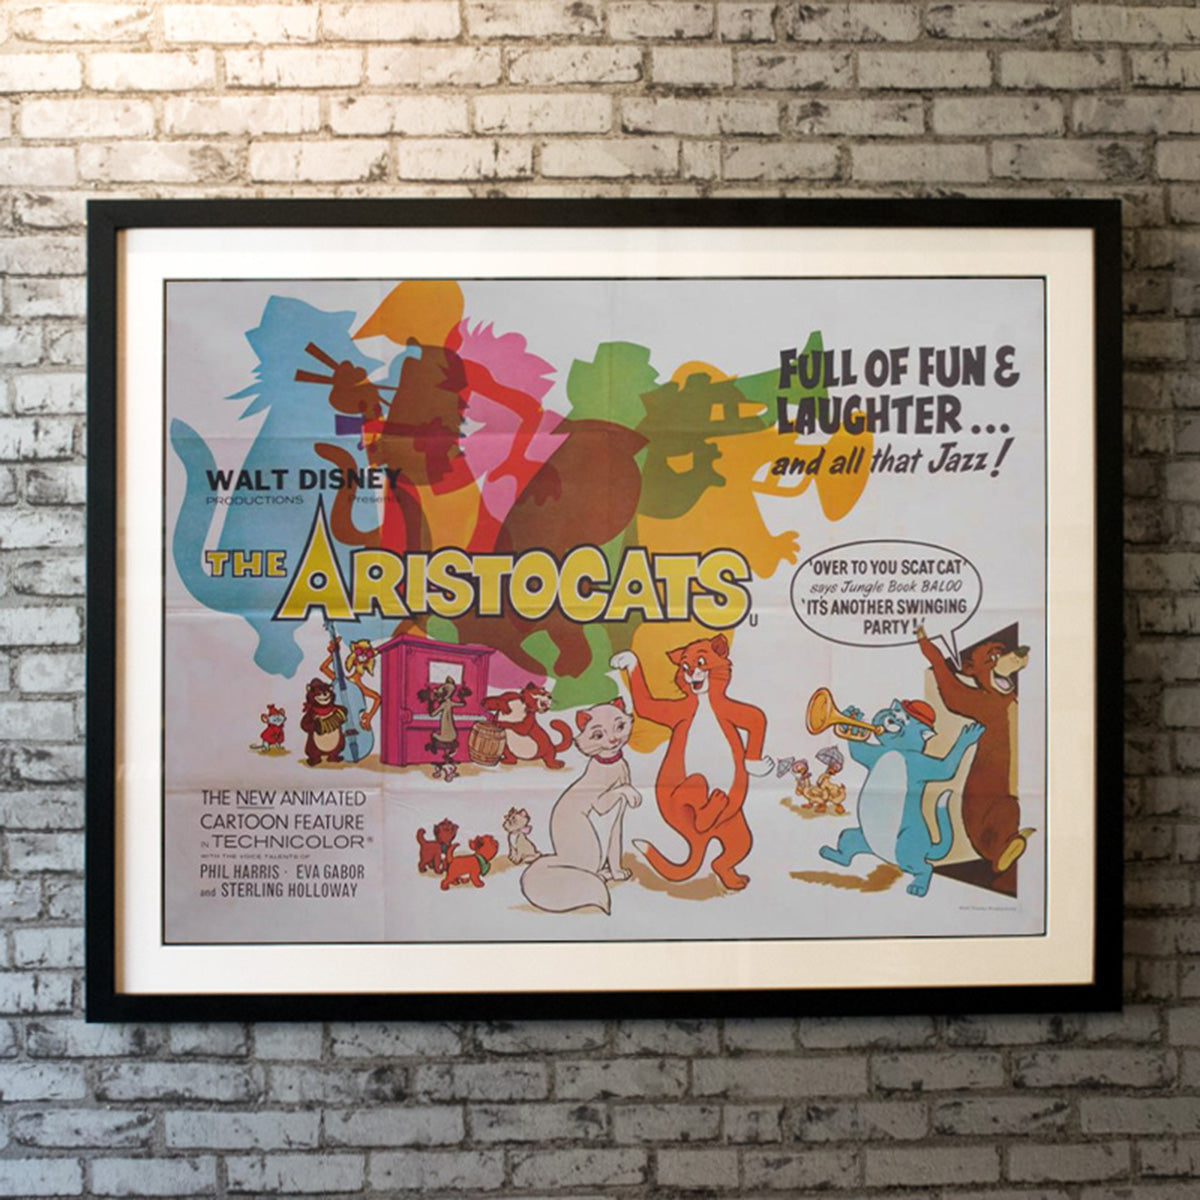 Original Movie Poster of Aristocats, The (1970)